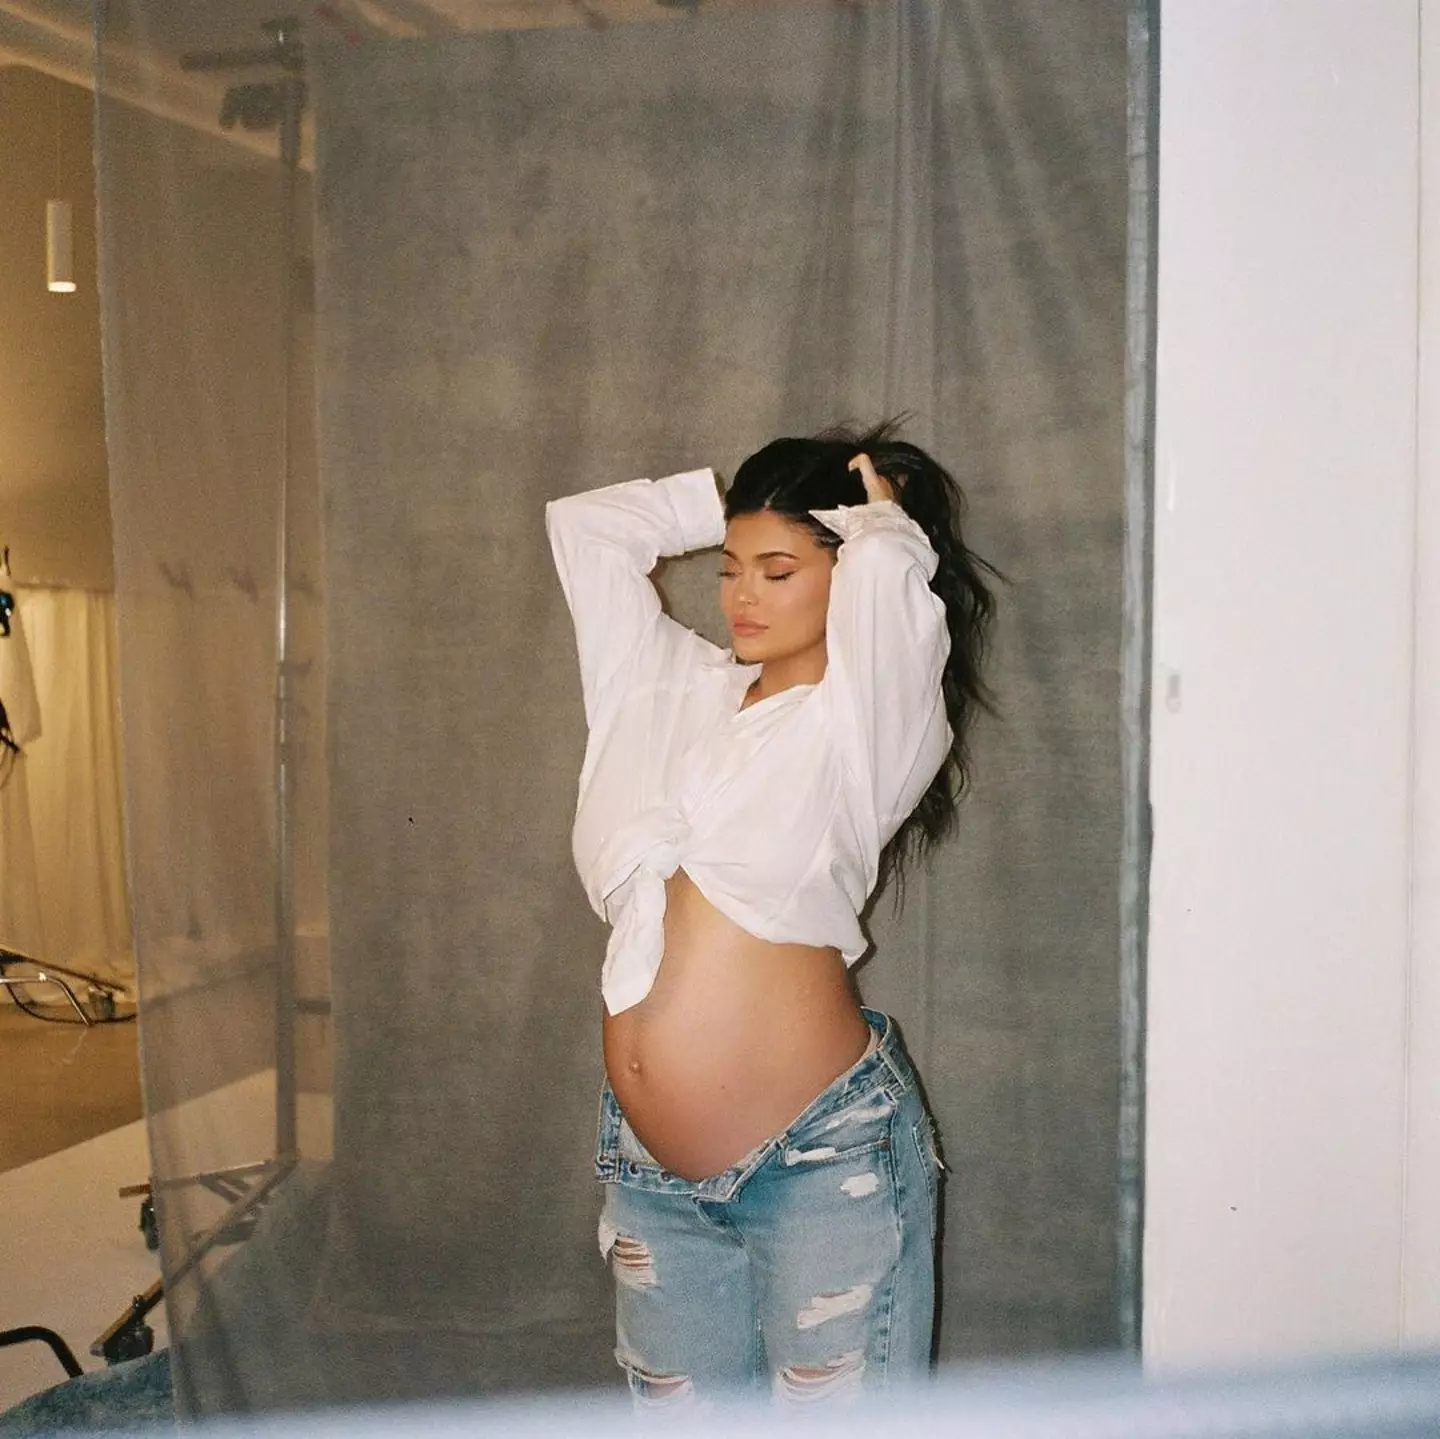 Kylie gave birth on 2/2/22 (